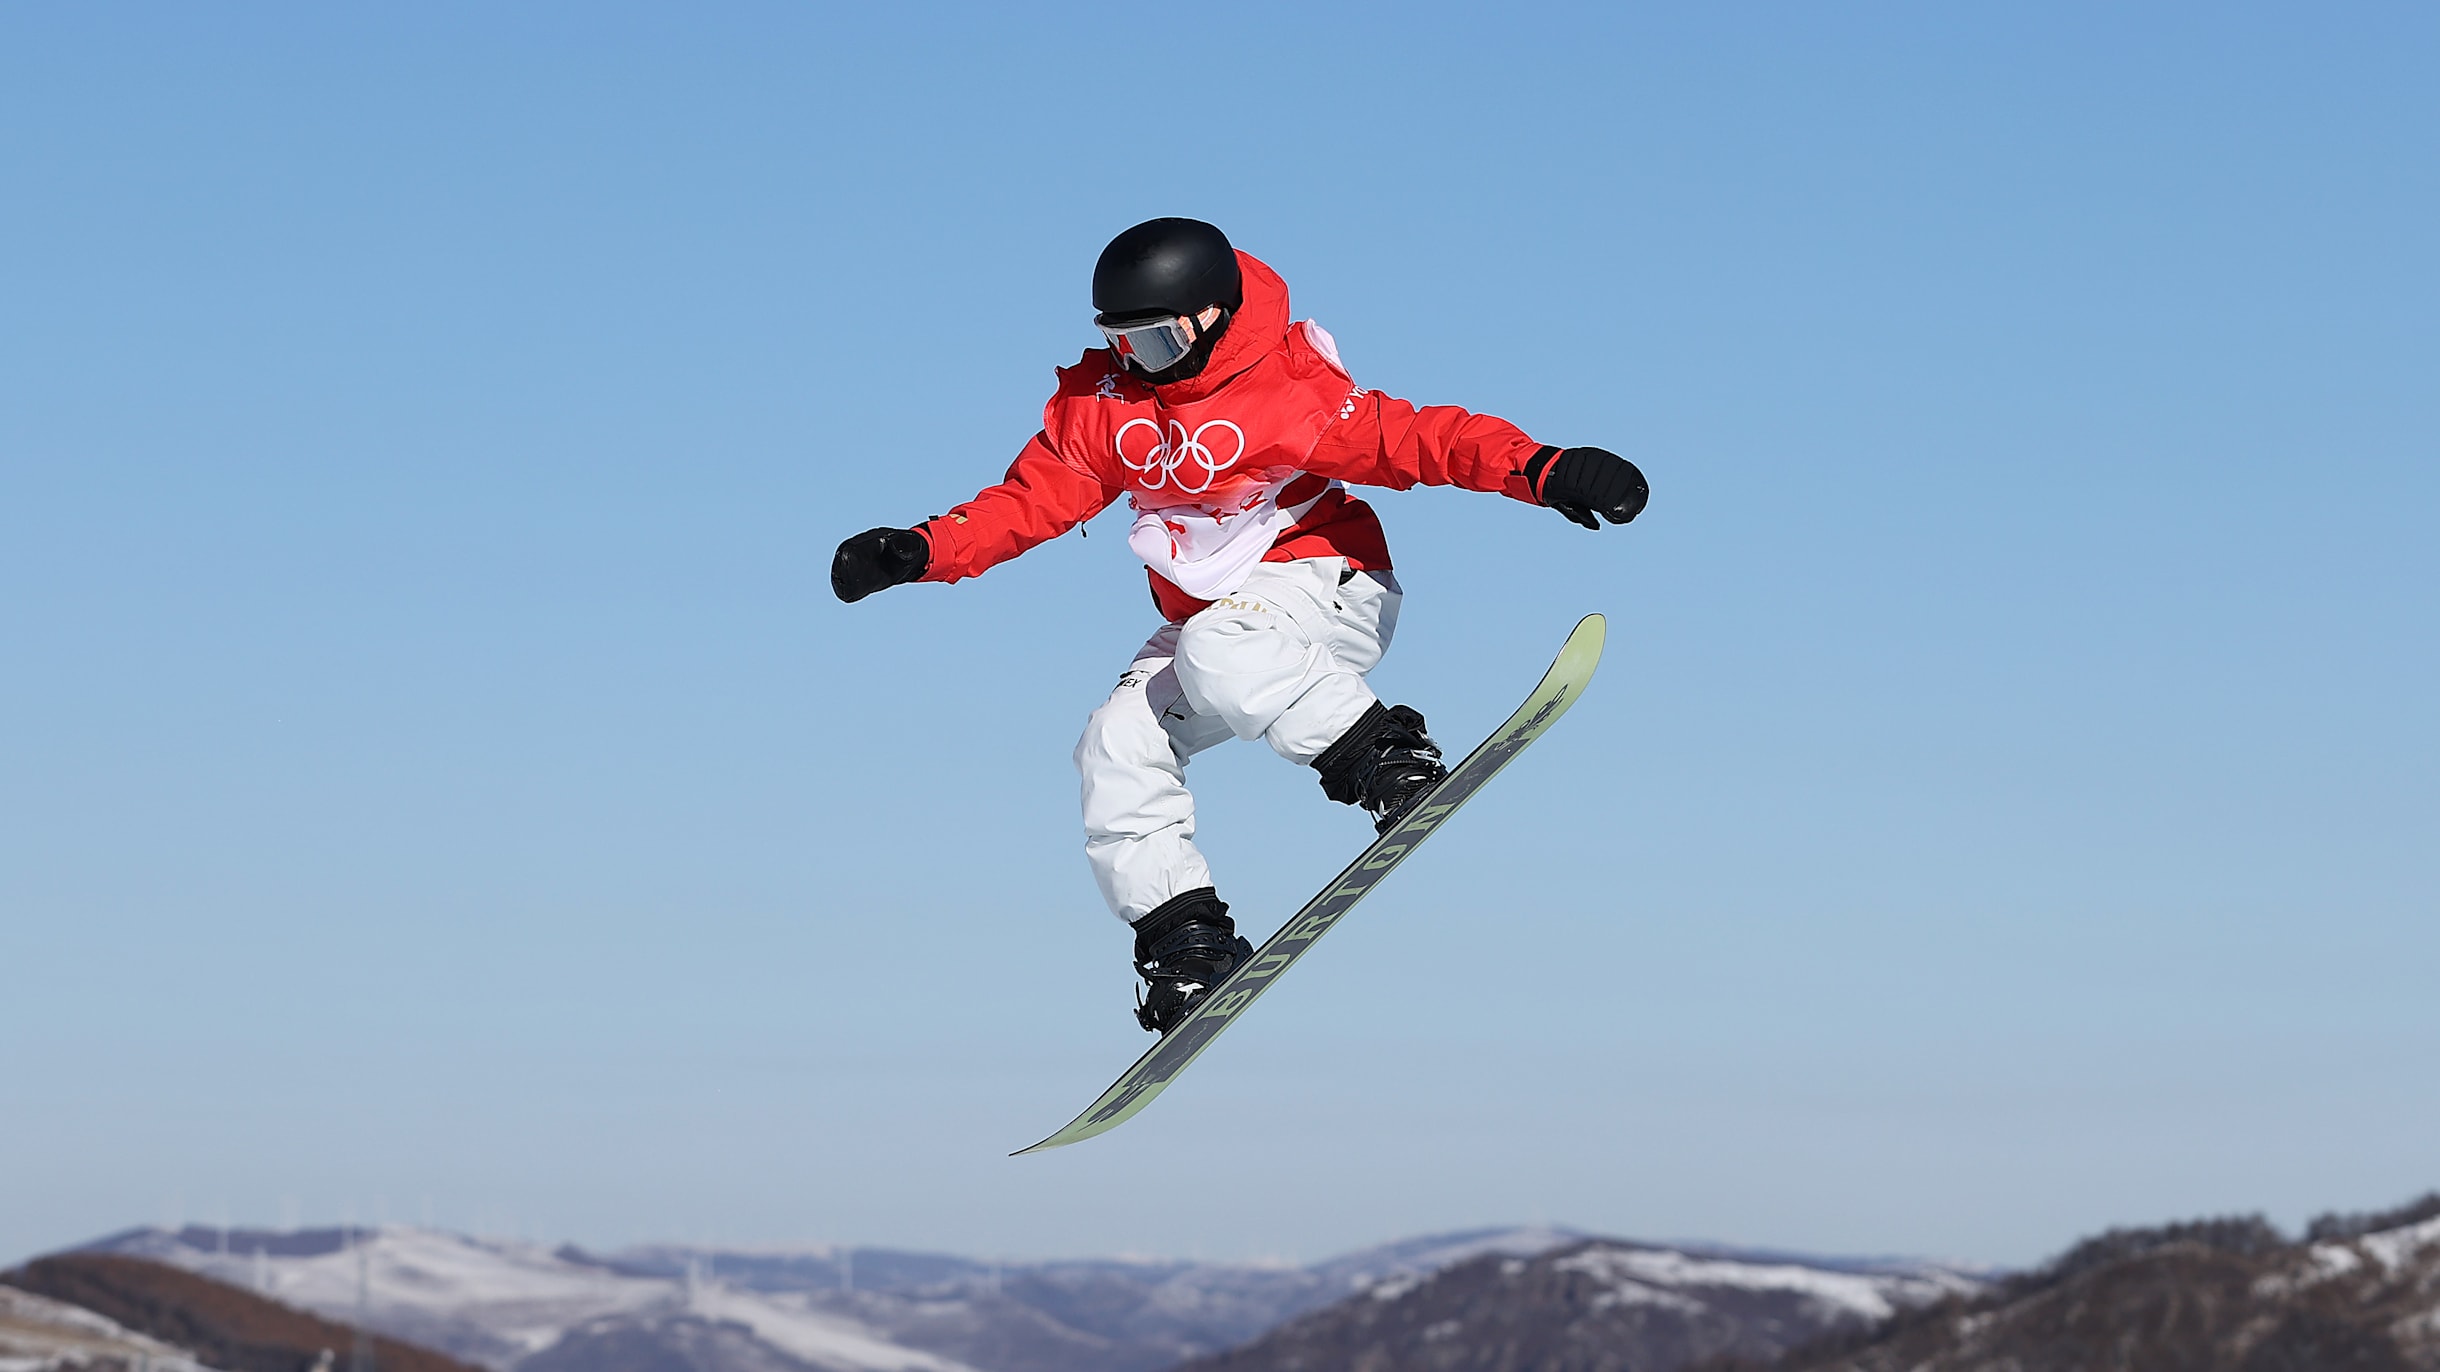 snowboarding live olympics